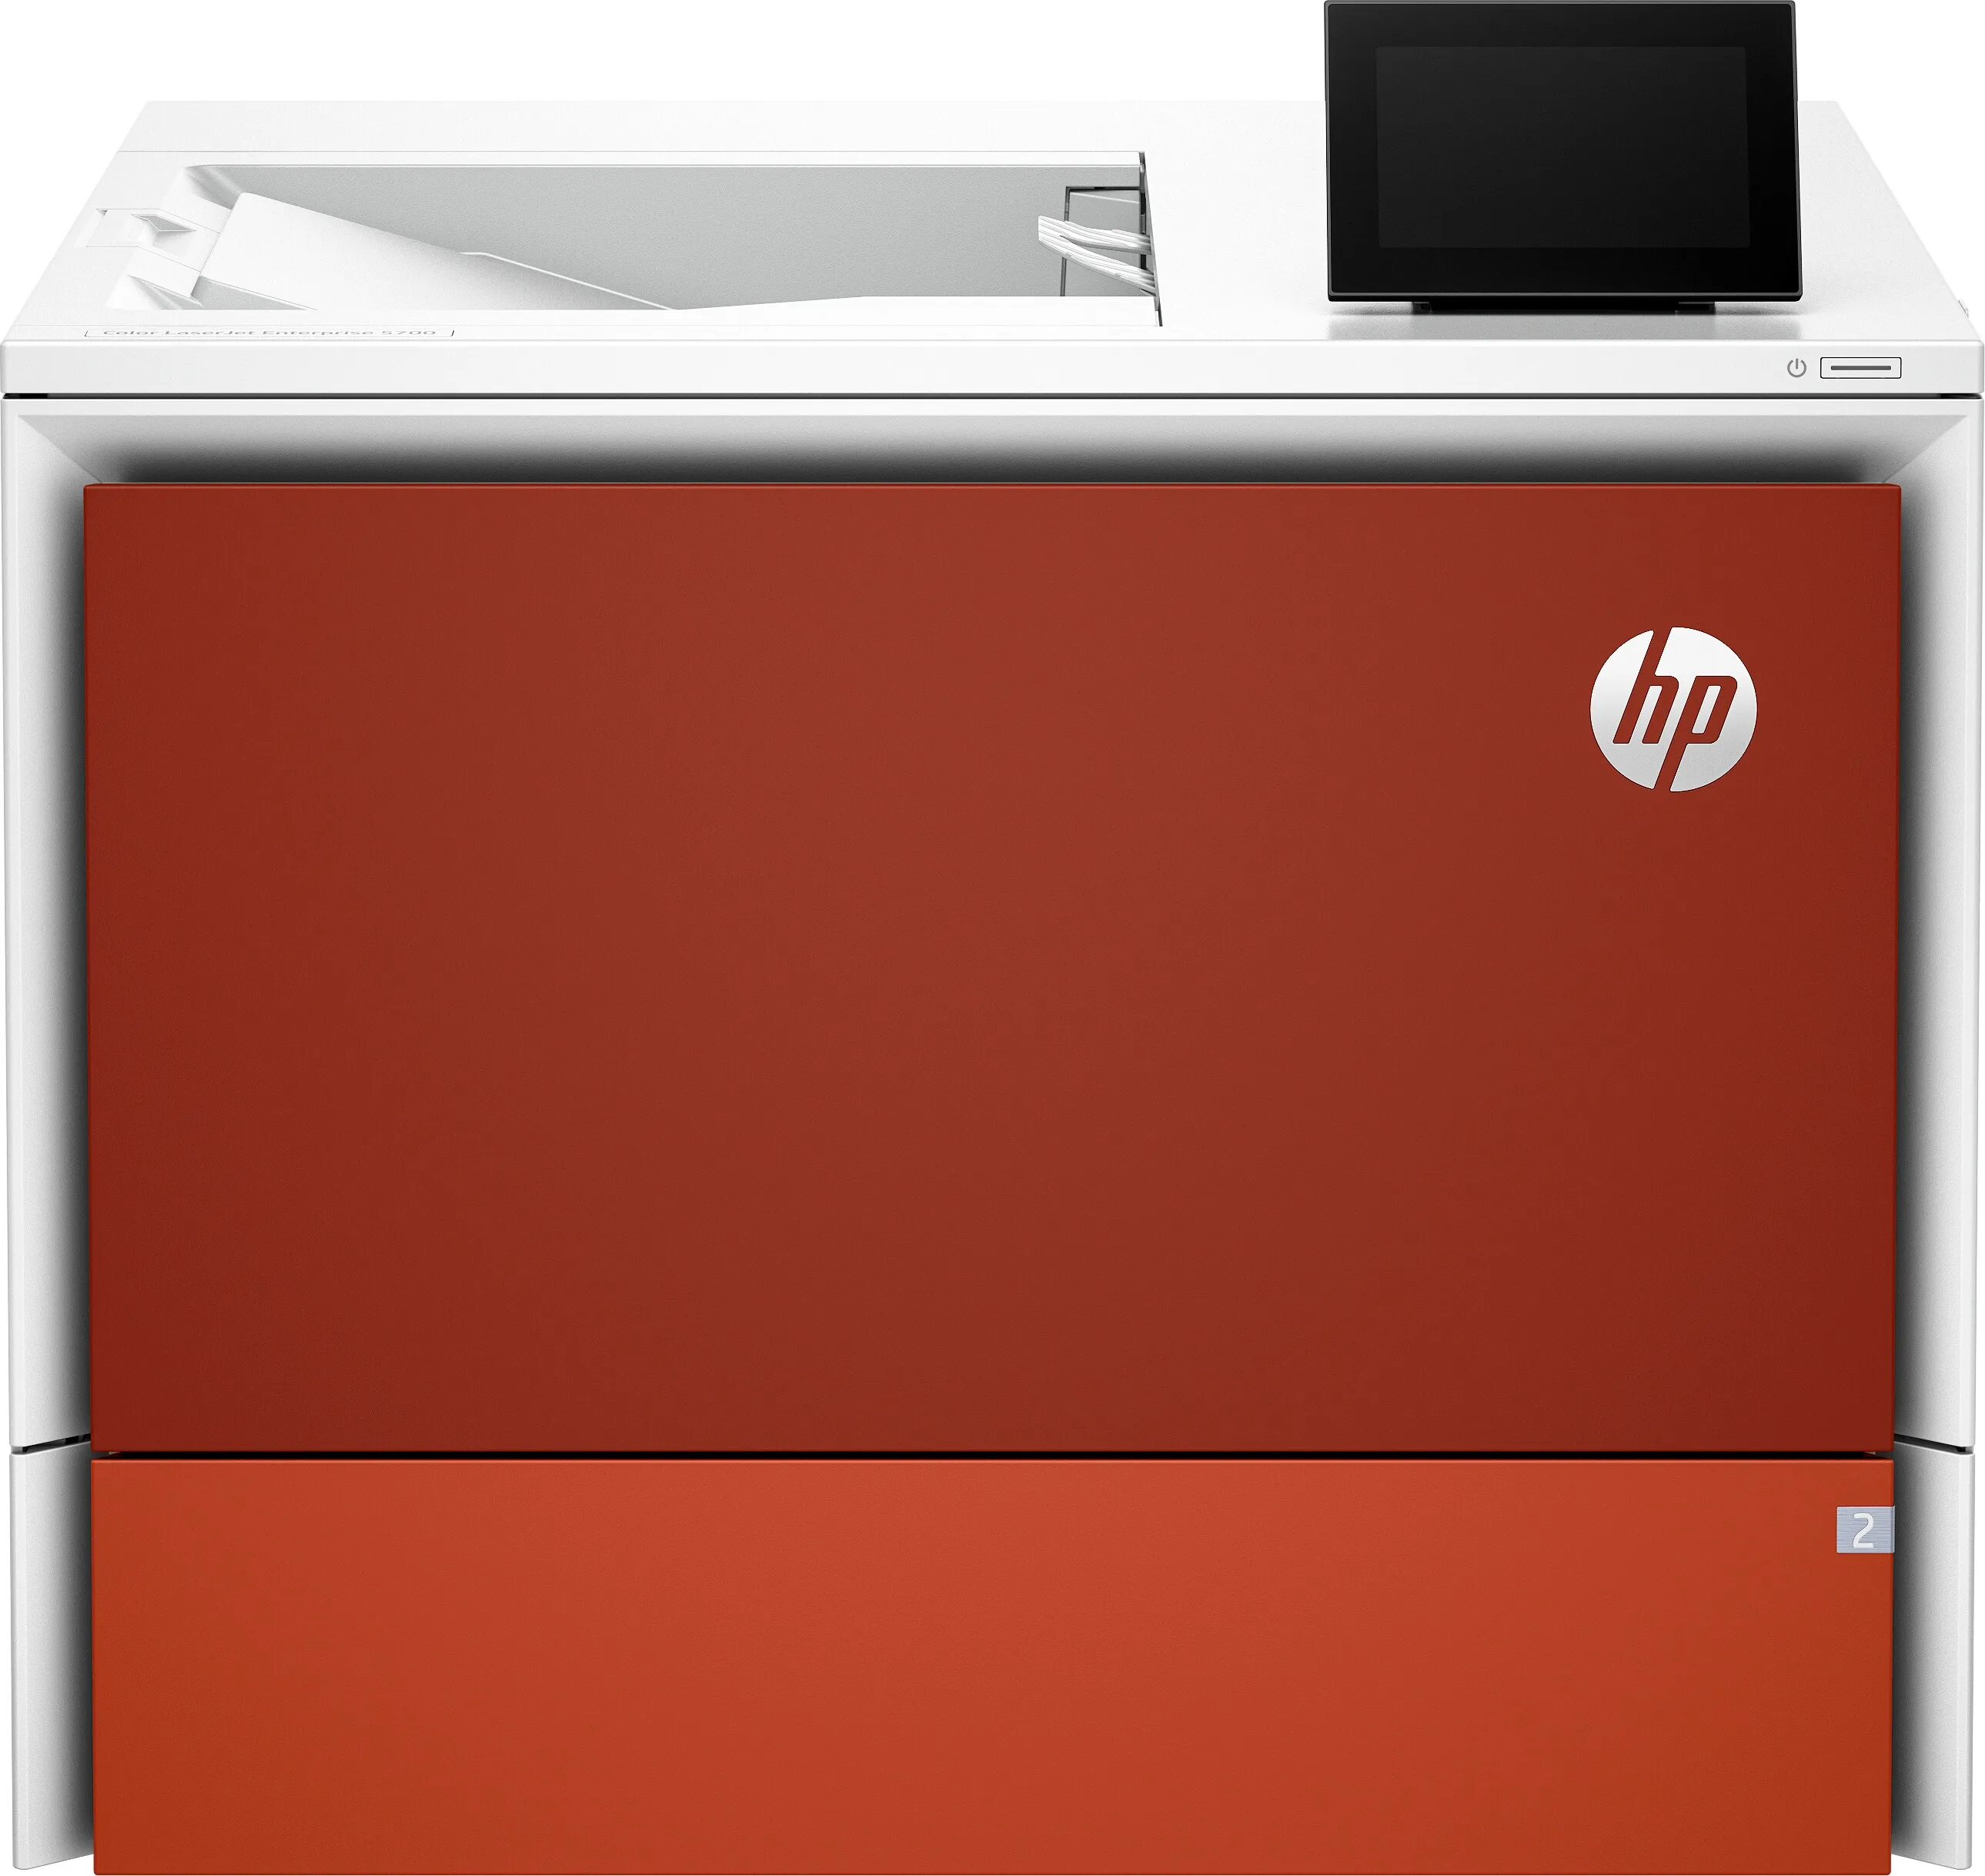 Vente HP Clr LaserJet Red Storage Stand HP au meilleur prix - visuel 2